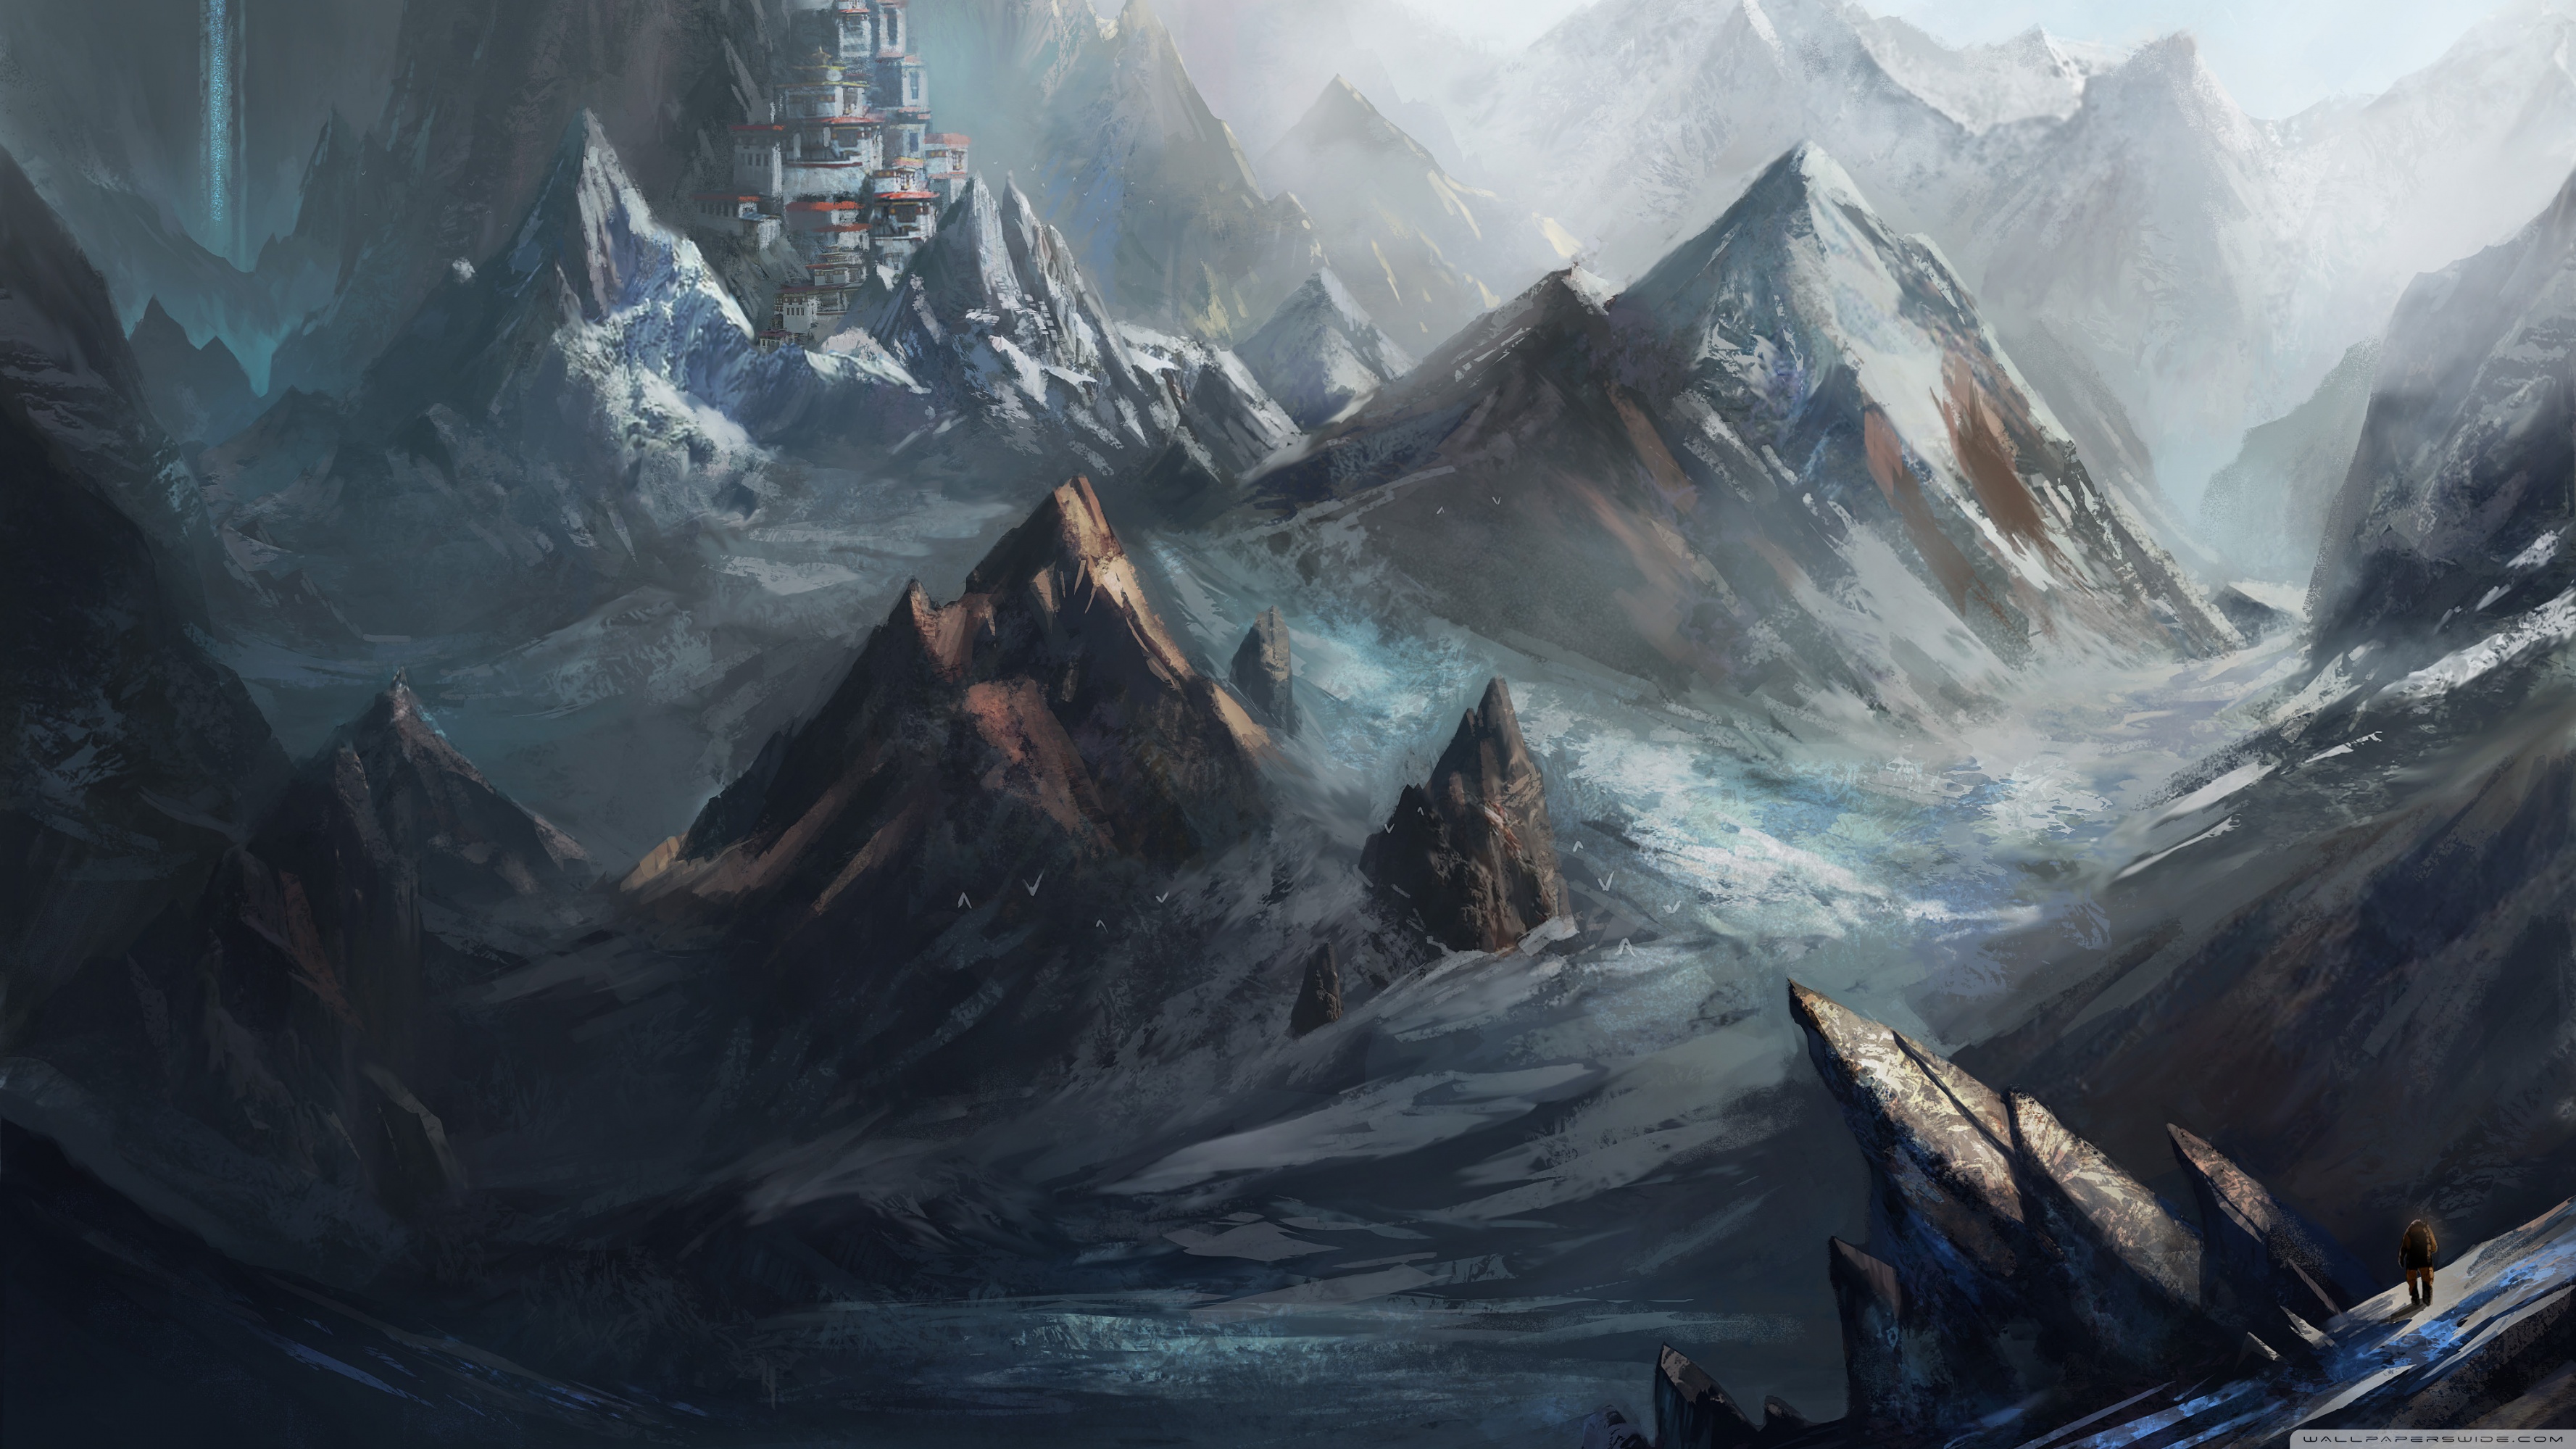 Mountain range - Other & Anime Background Wallpapers on Desktop Nexus  (Image 2484956)